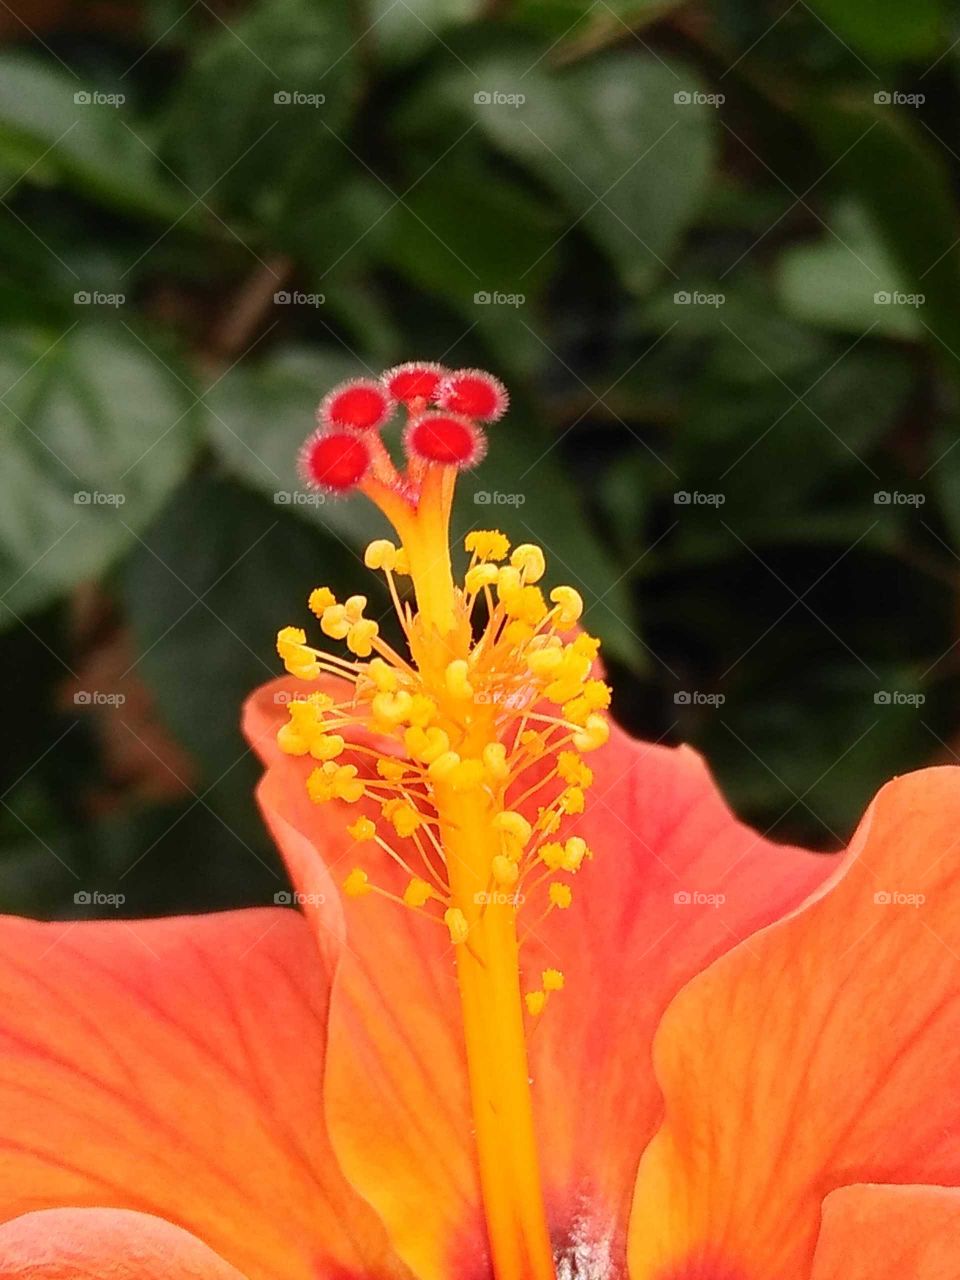 stylus of the hibiscus flower in my garden